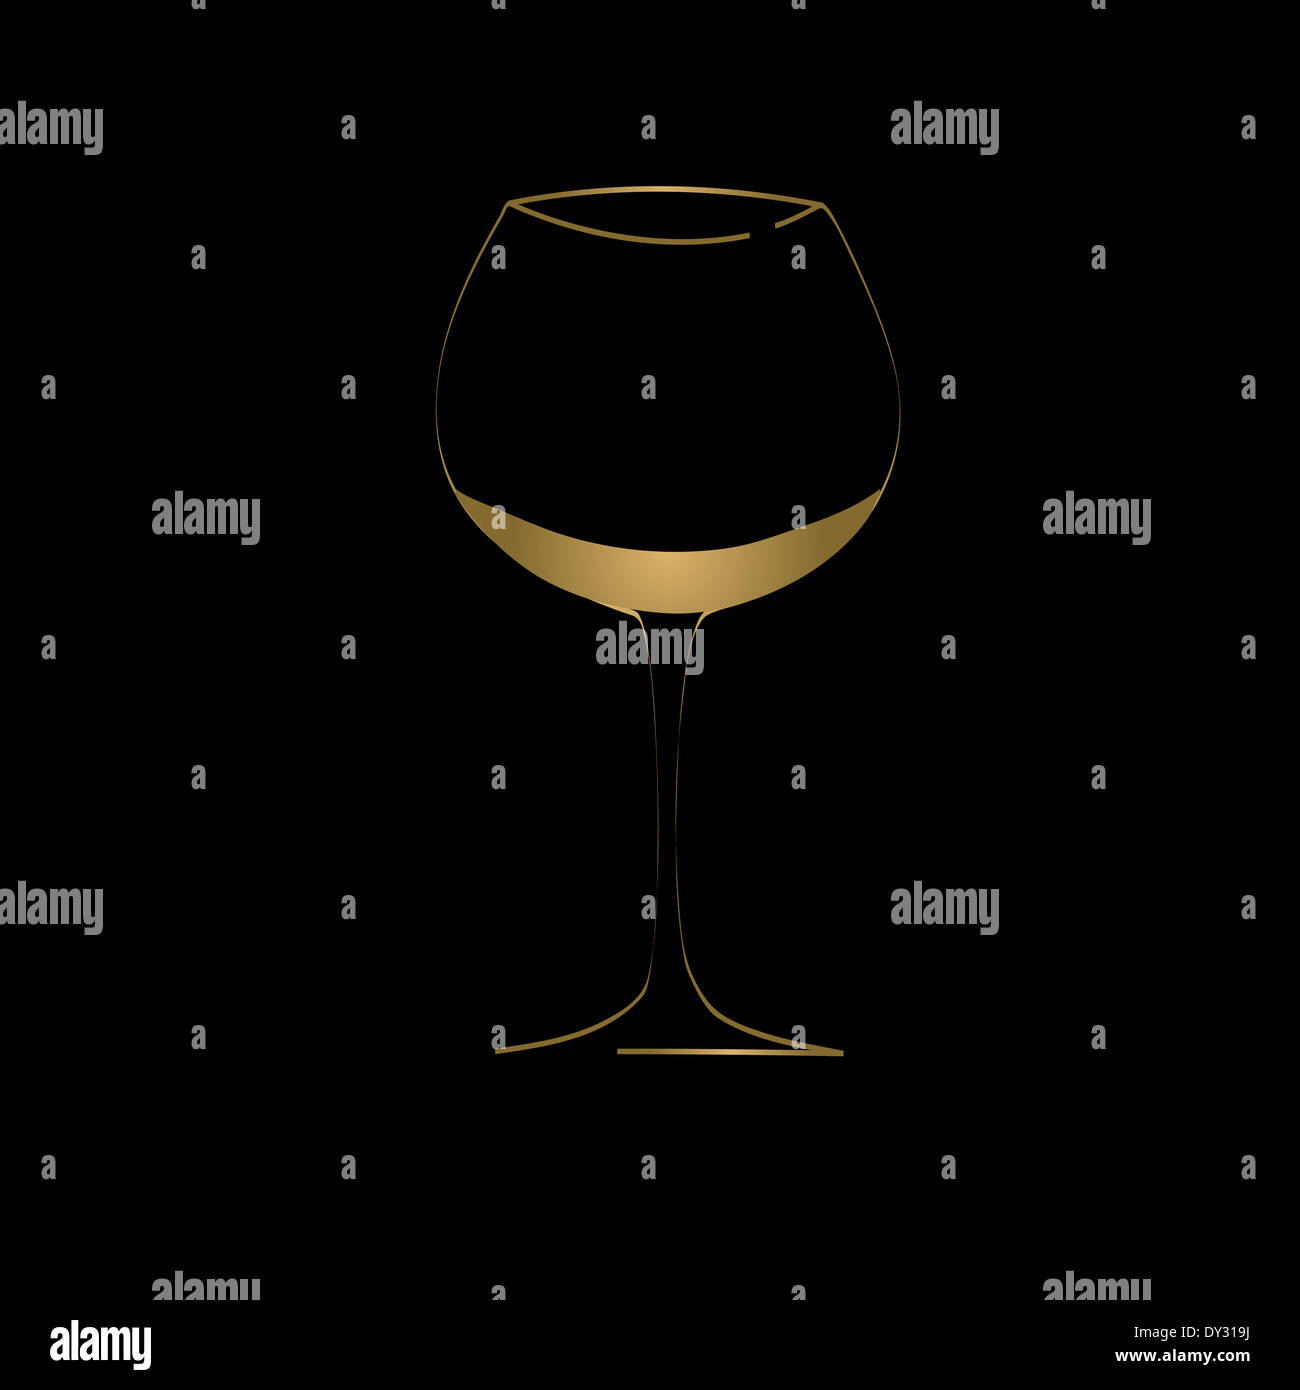 wine glass concept menu design Stock Photo